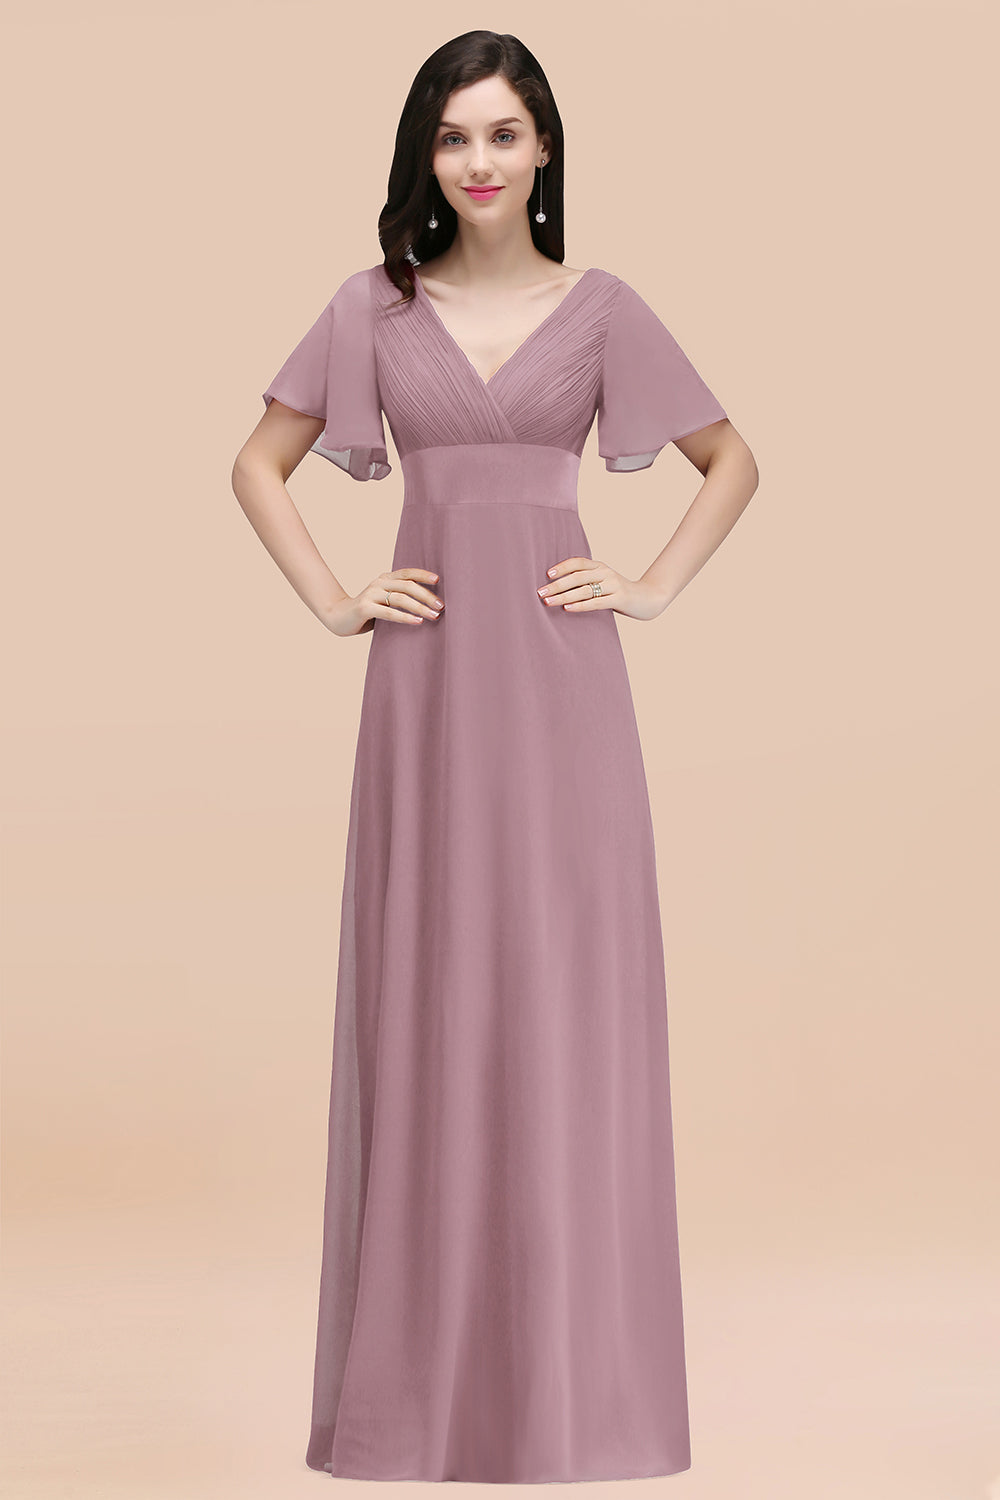 Affordable V-Neck Ruffle Long Burgundy Bridesmaid Dress With Short-Sleeves-27dress